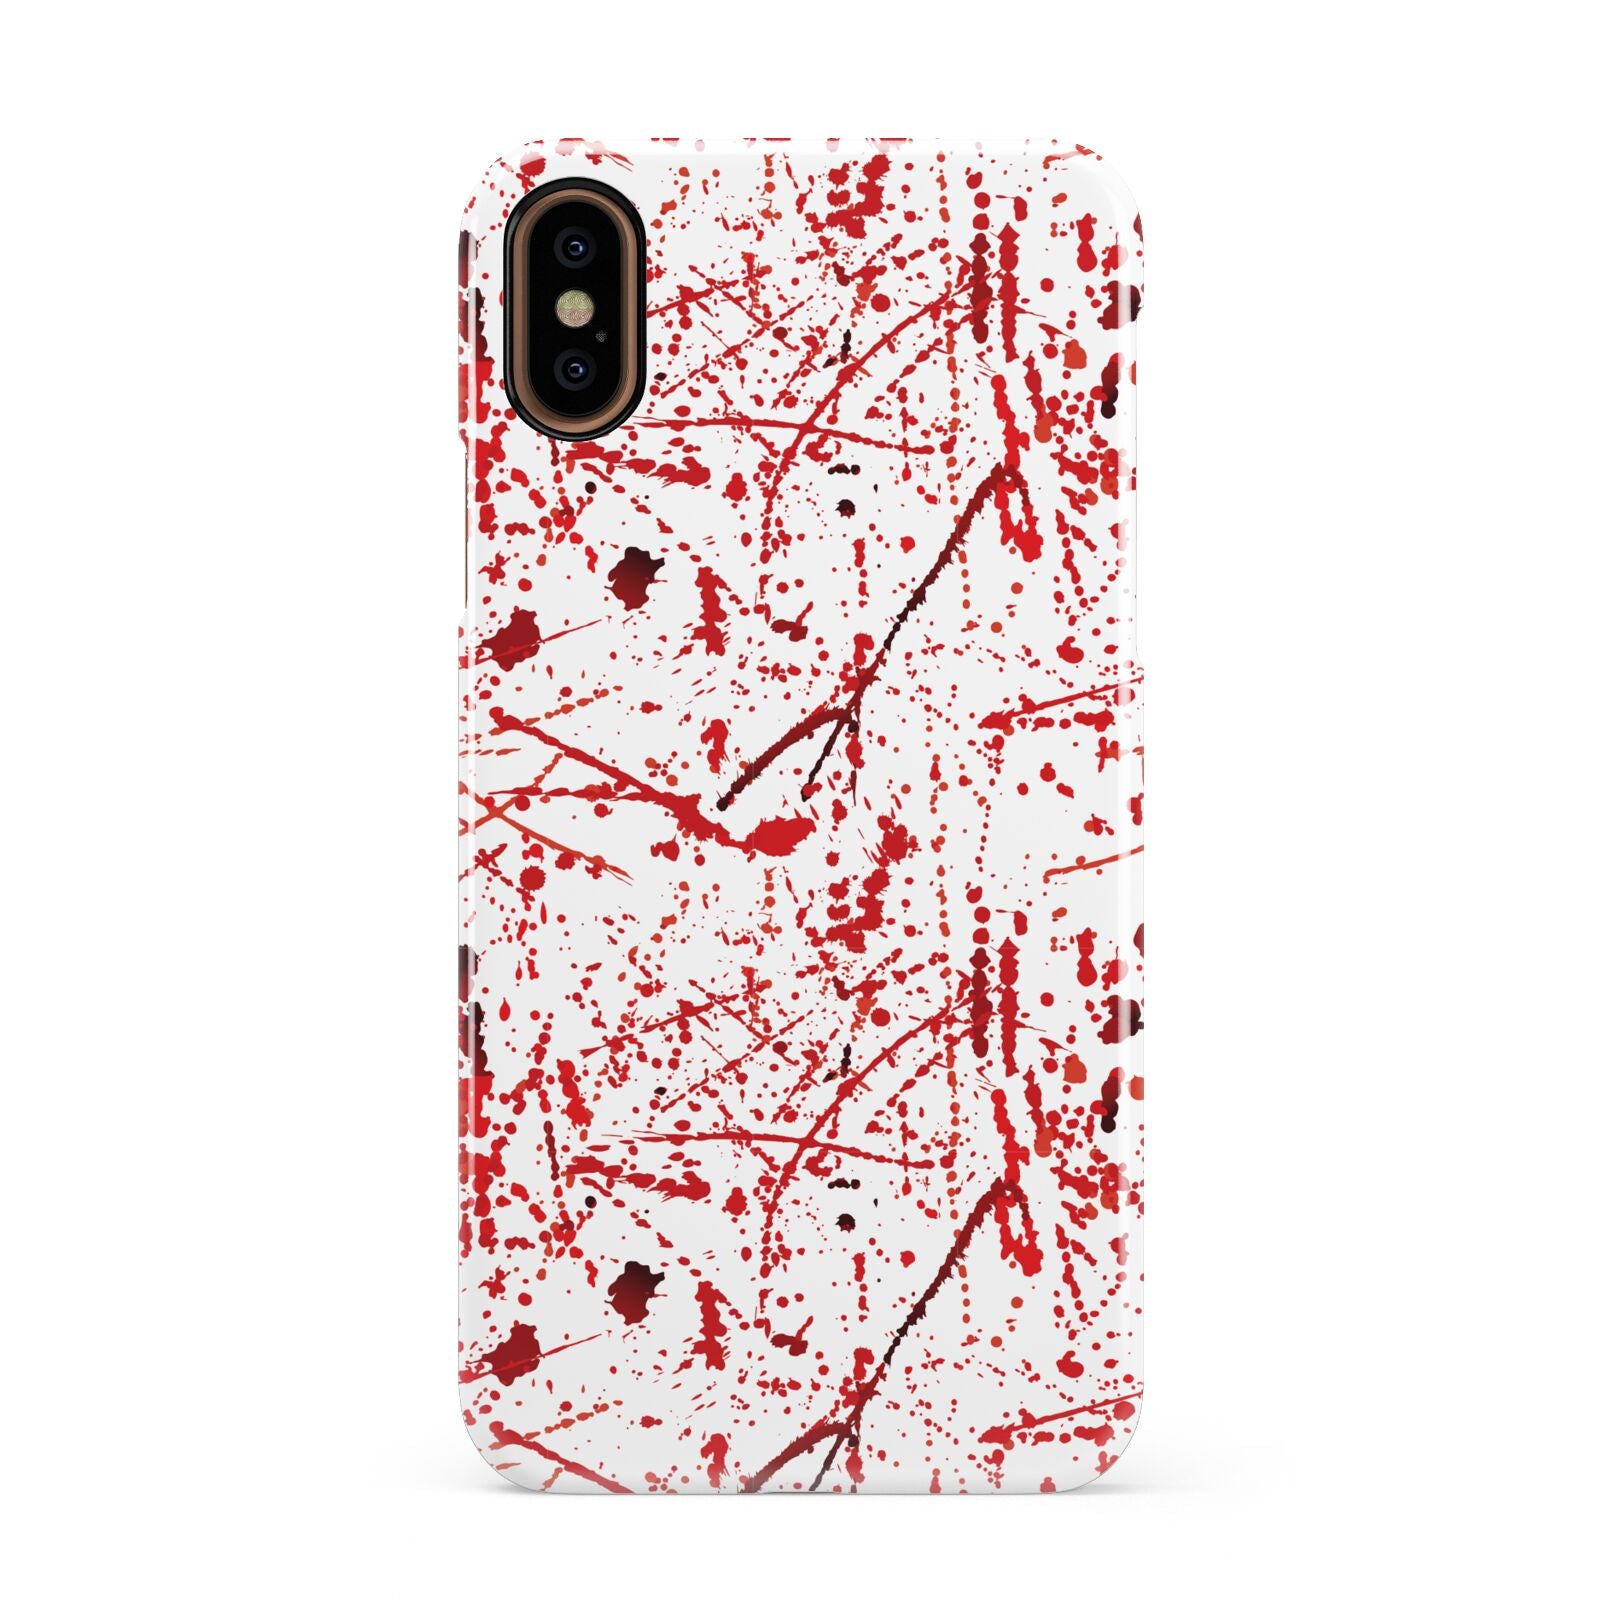 Blood Splatter Apple iPhone XS 3D Snap Case